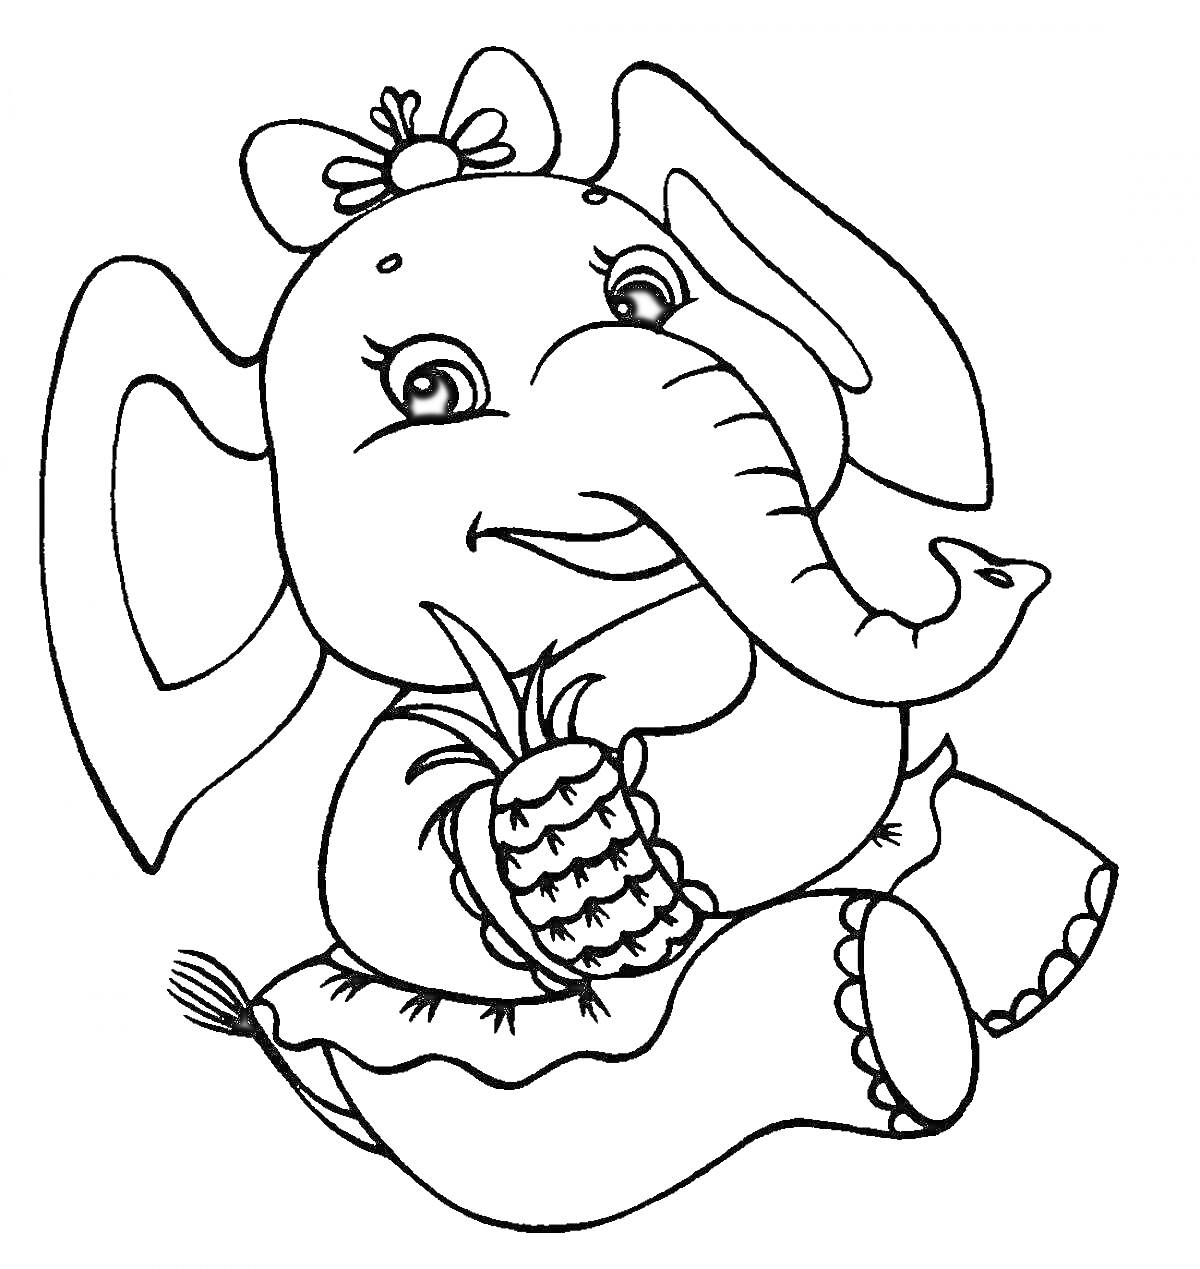 Слон с ананасом и бантом на голове